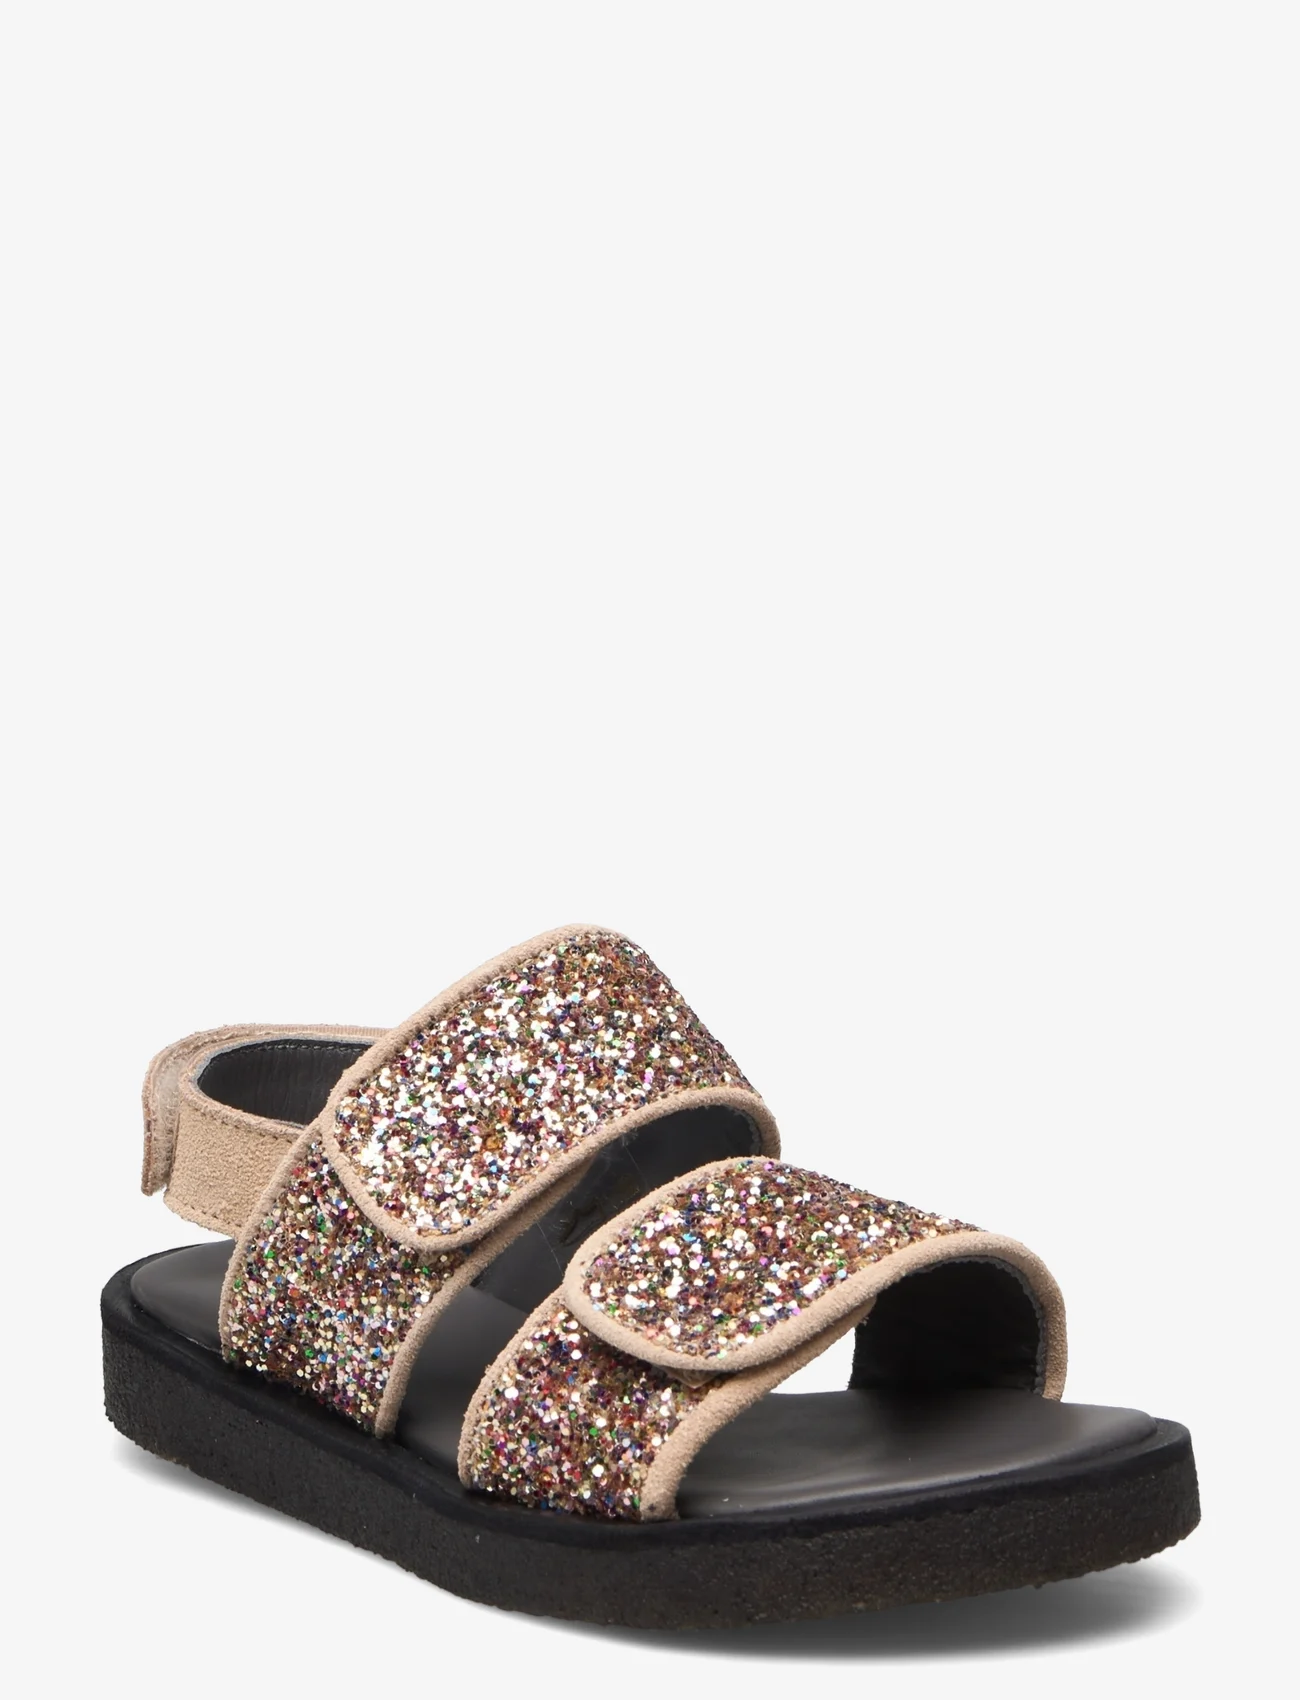 ANGULUS - Sandals - flat - open toe - op - summer savings - 1149/2488 sand/multi glitter - 0